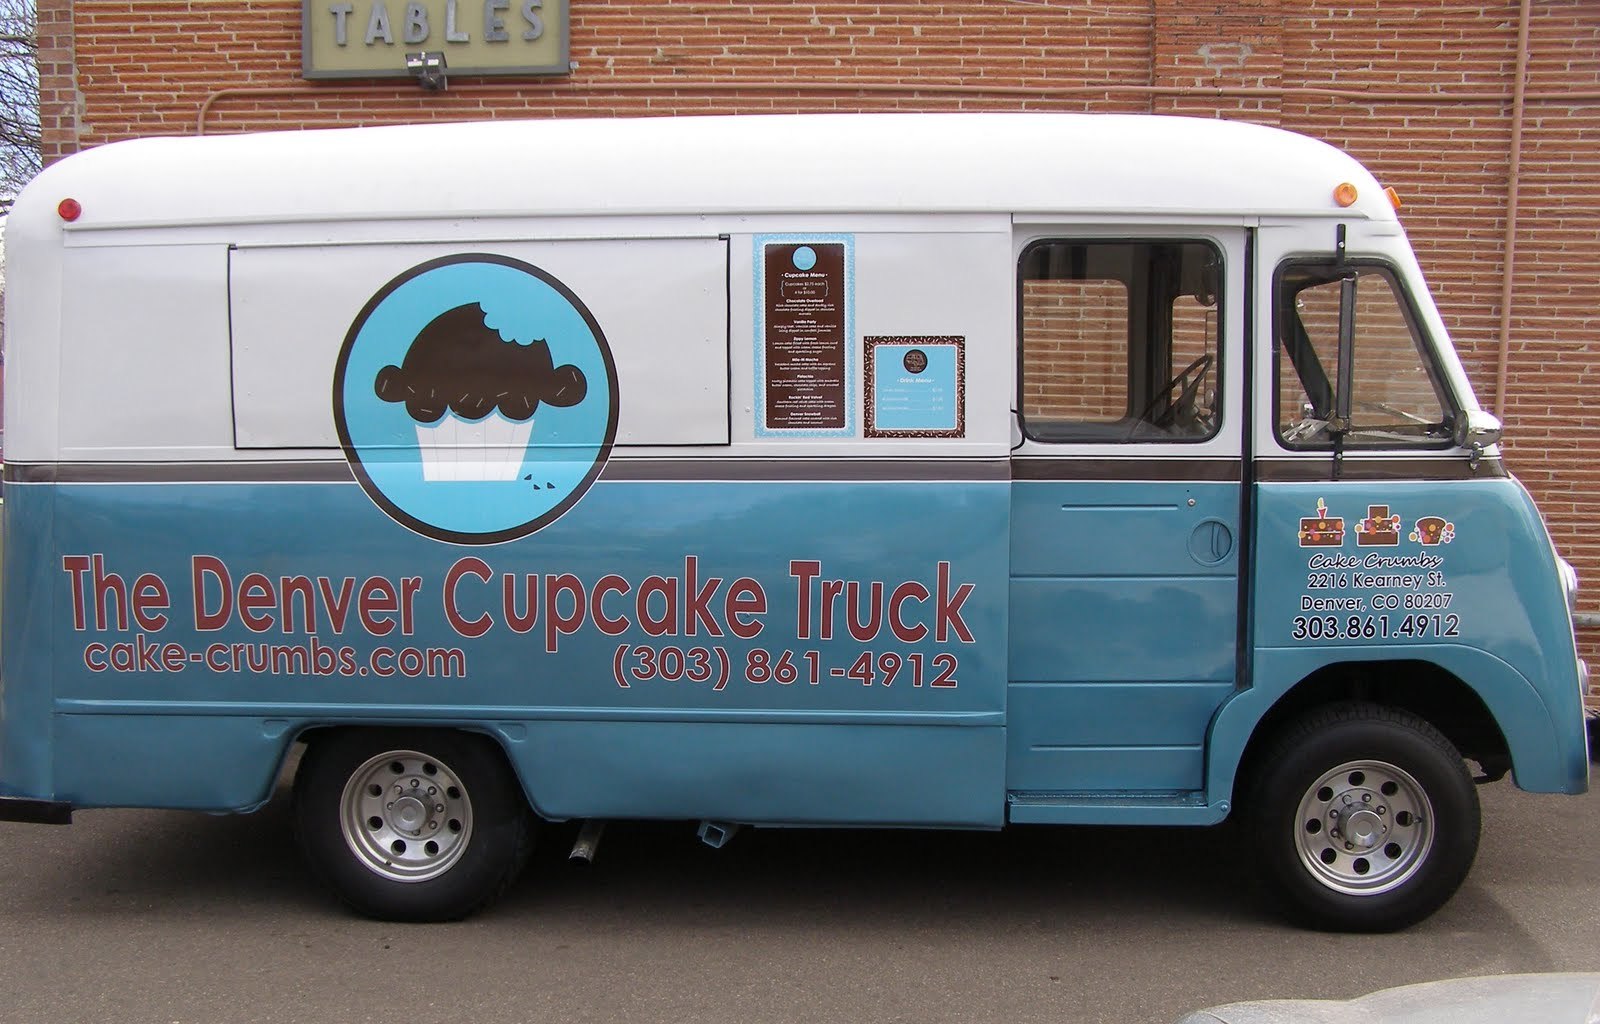 The Denver Cupcake Truck